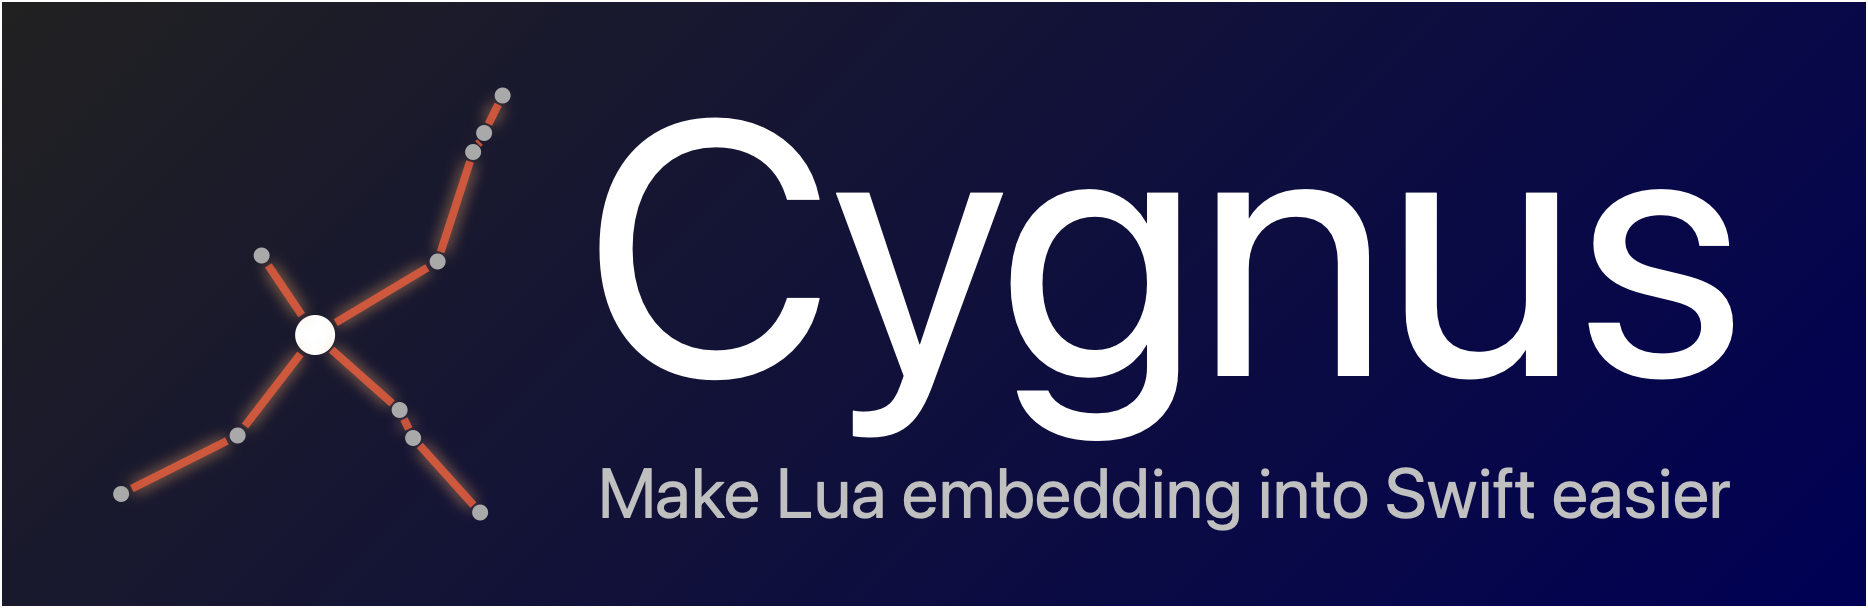 Cygnus - banner